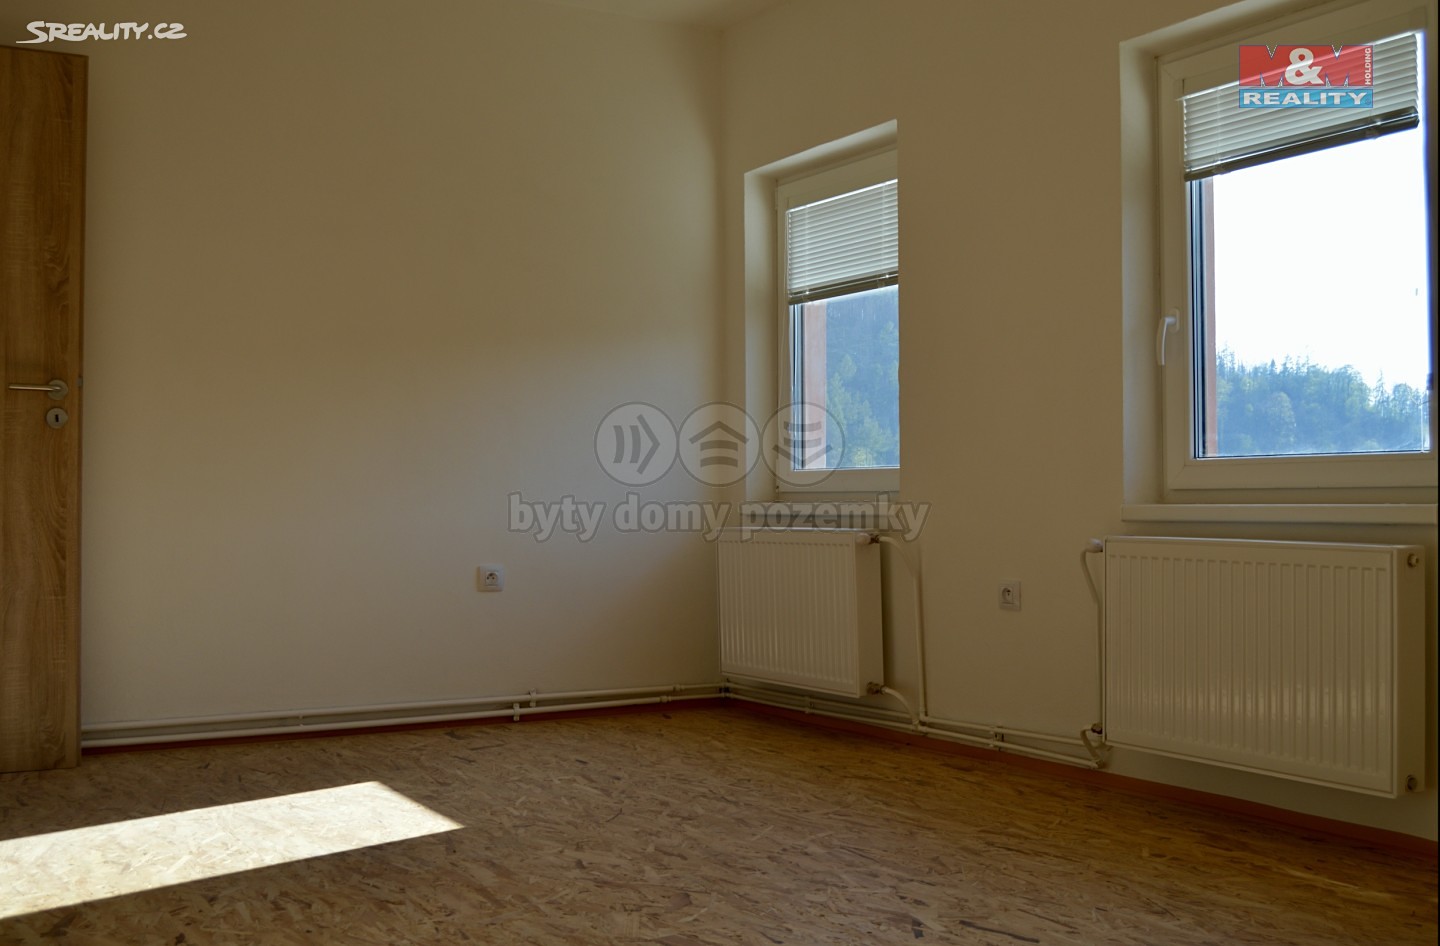 Pronájem bytu 3+1 70 m², Na Skalce, Boskovice